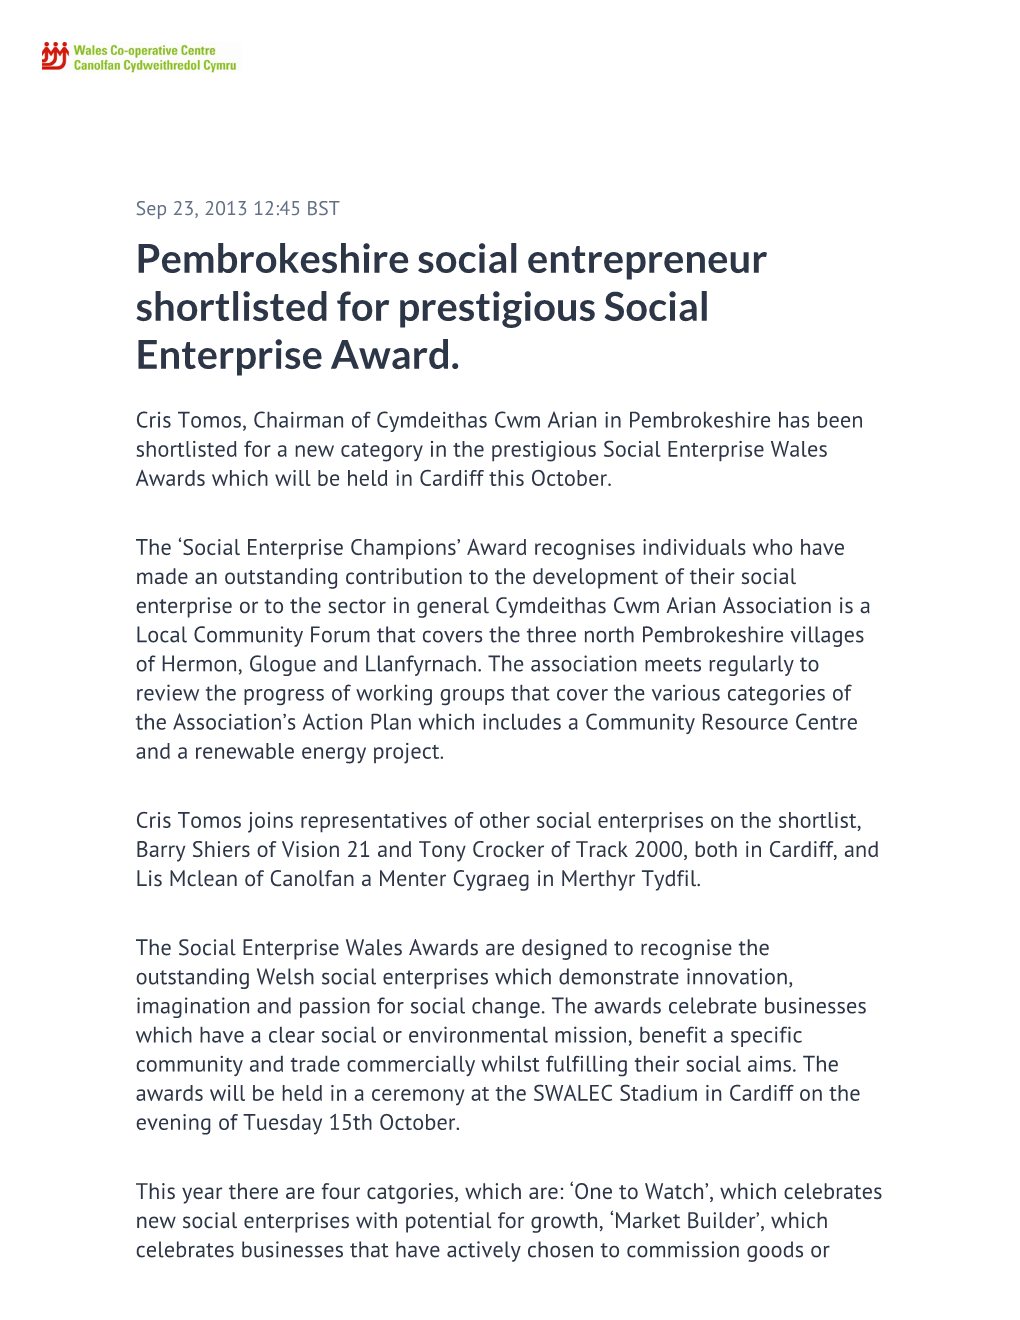 Pembrokeshire Social Entrepreneur Shortlisted for Prestigious Social Enterprise Award